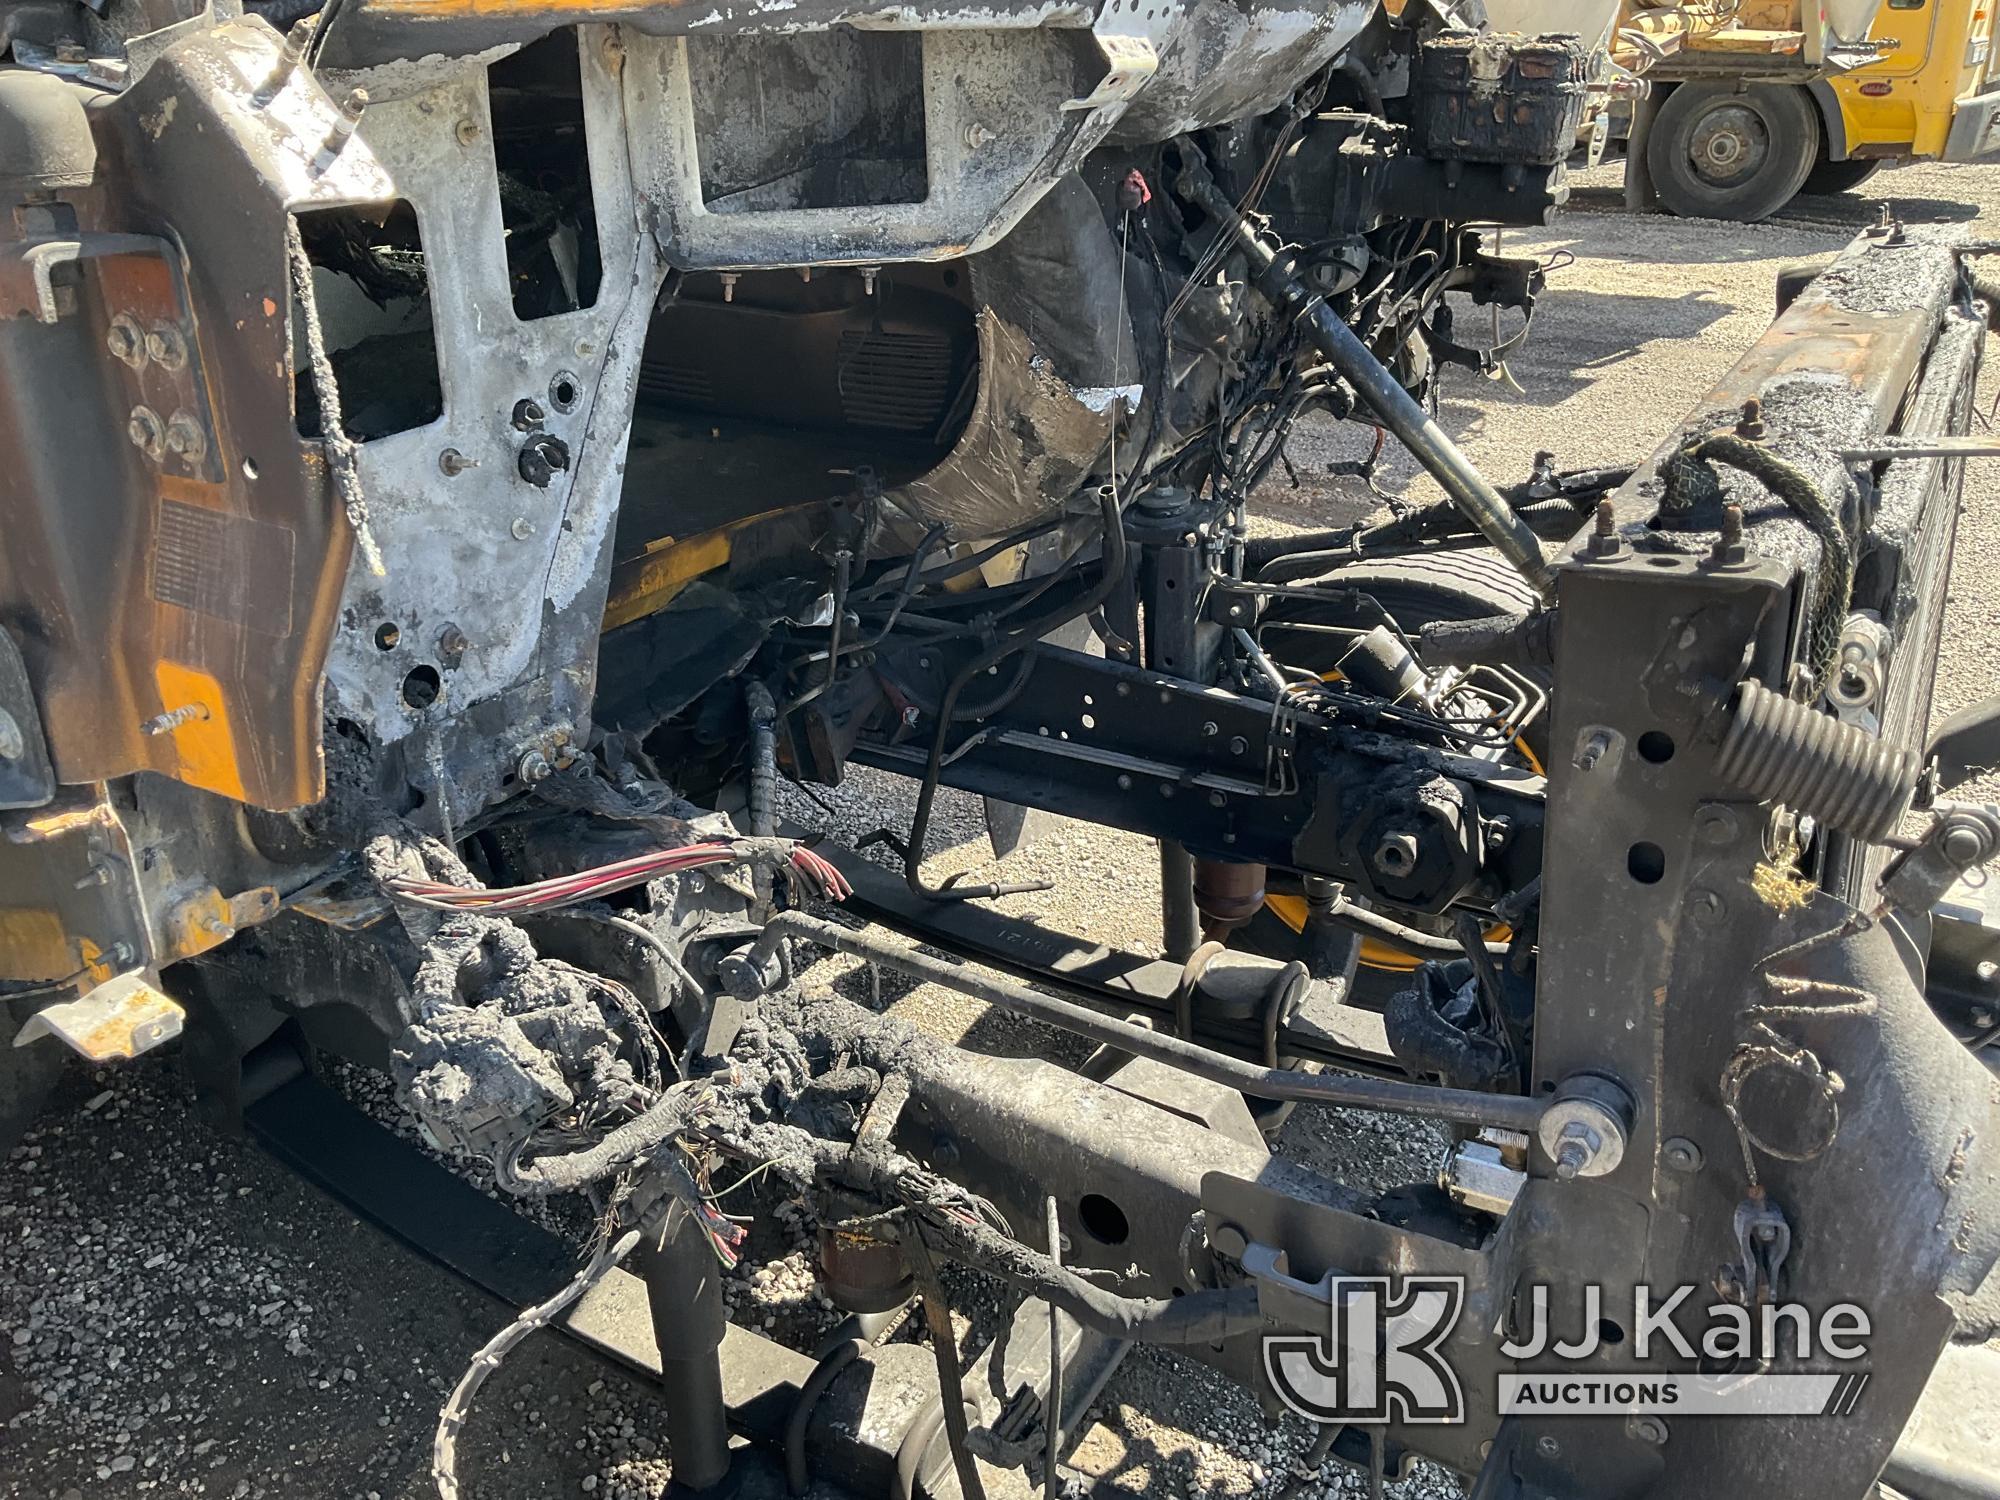 (Jurupa Valley, CA) 2009 Chevrolet C5V042 CUTAWAY Not Running, Fire Damage, Stripped of Parts